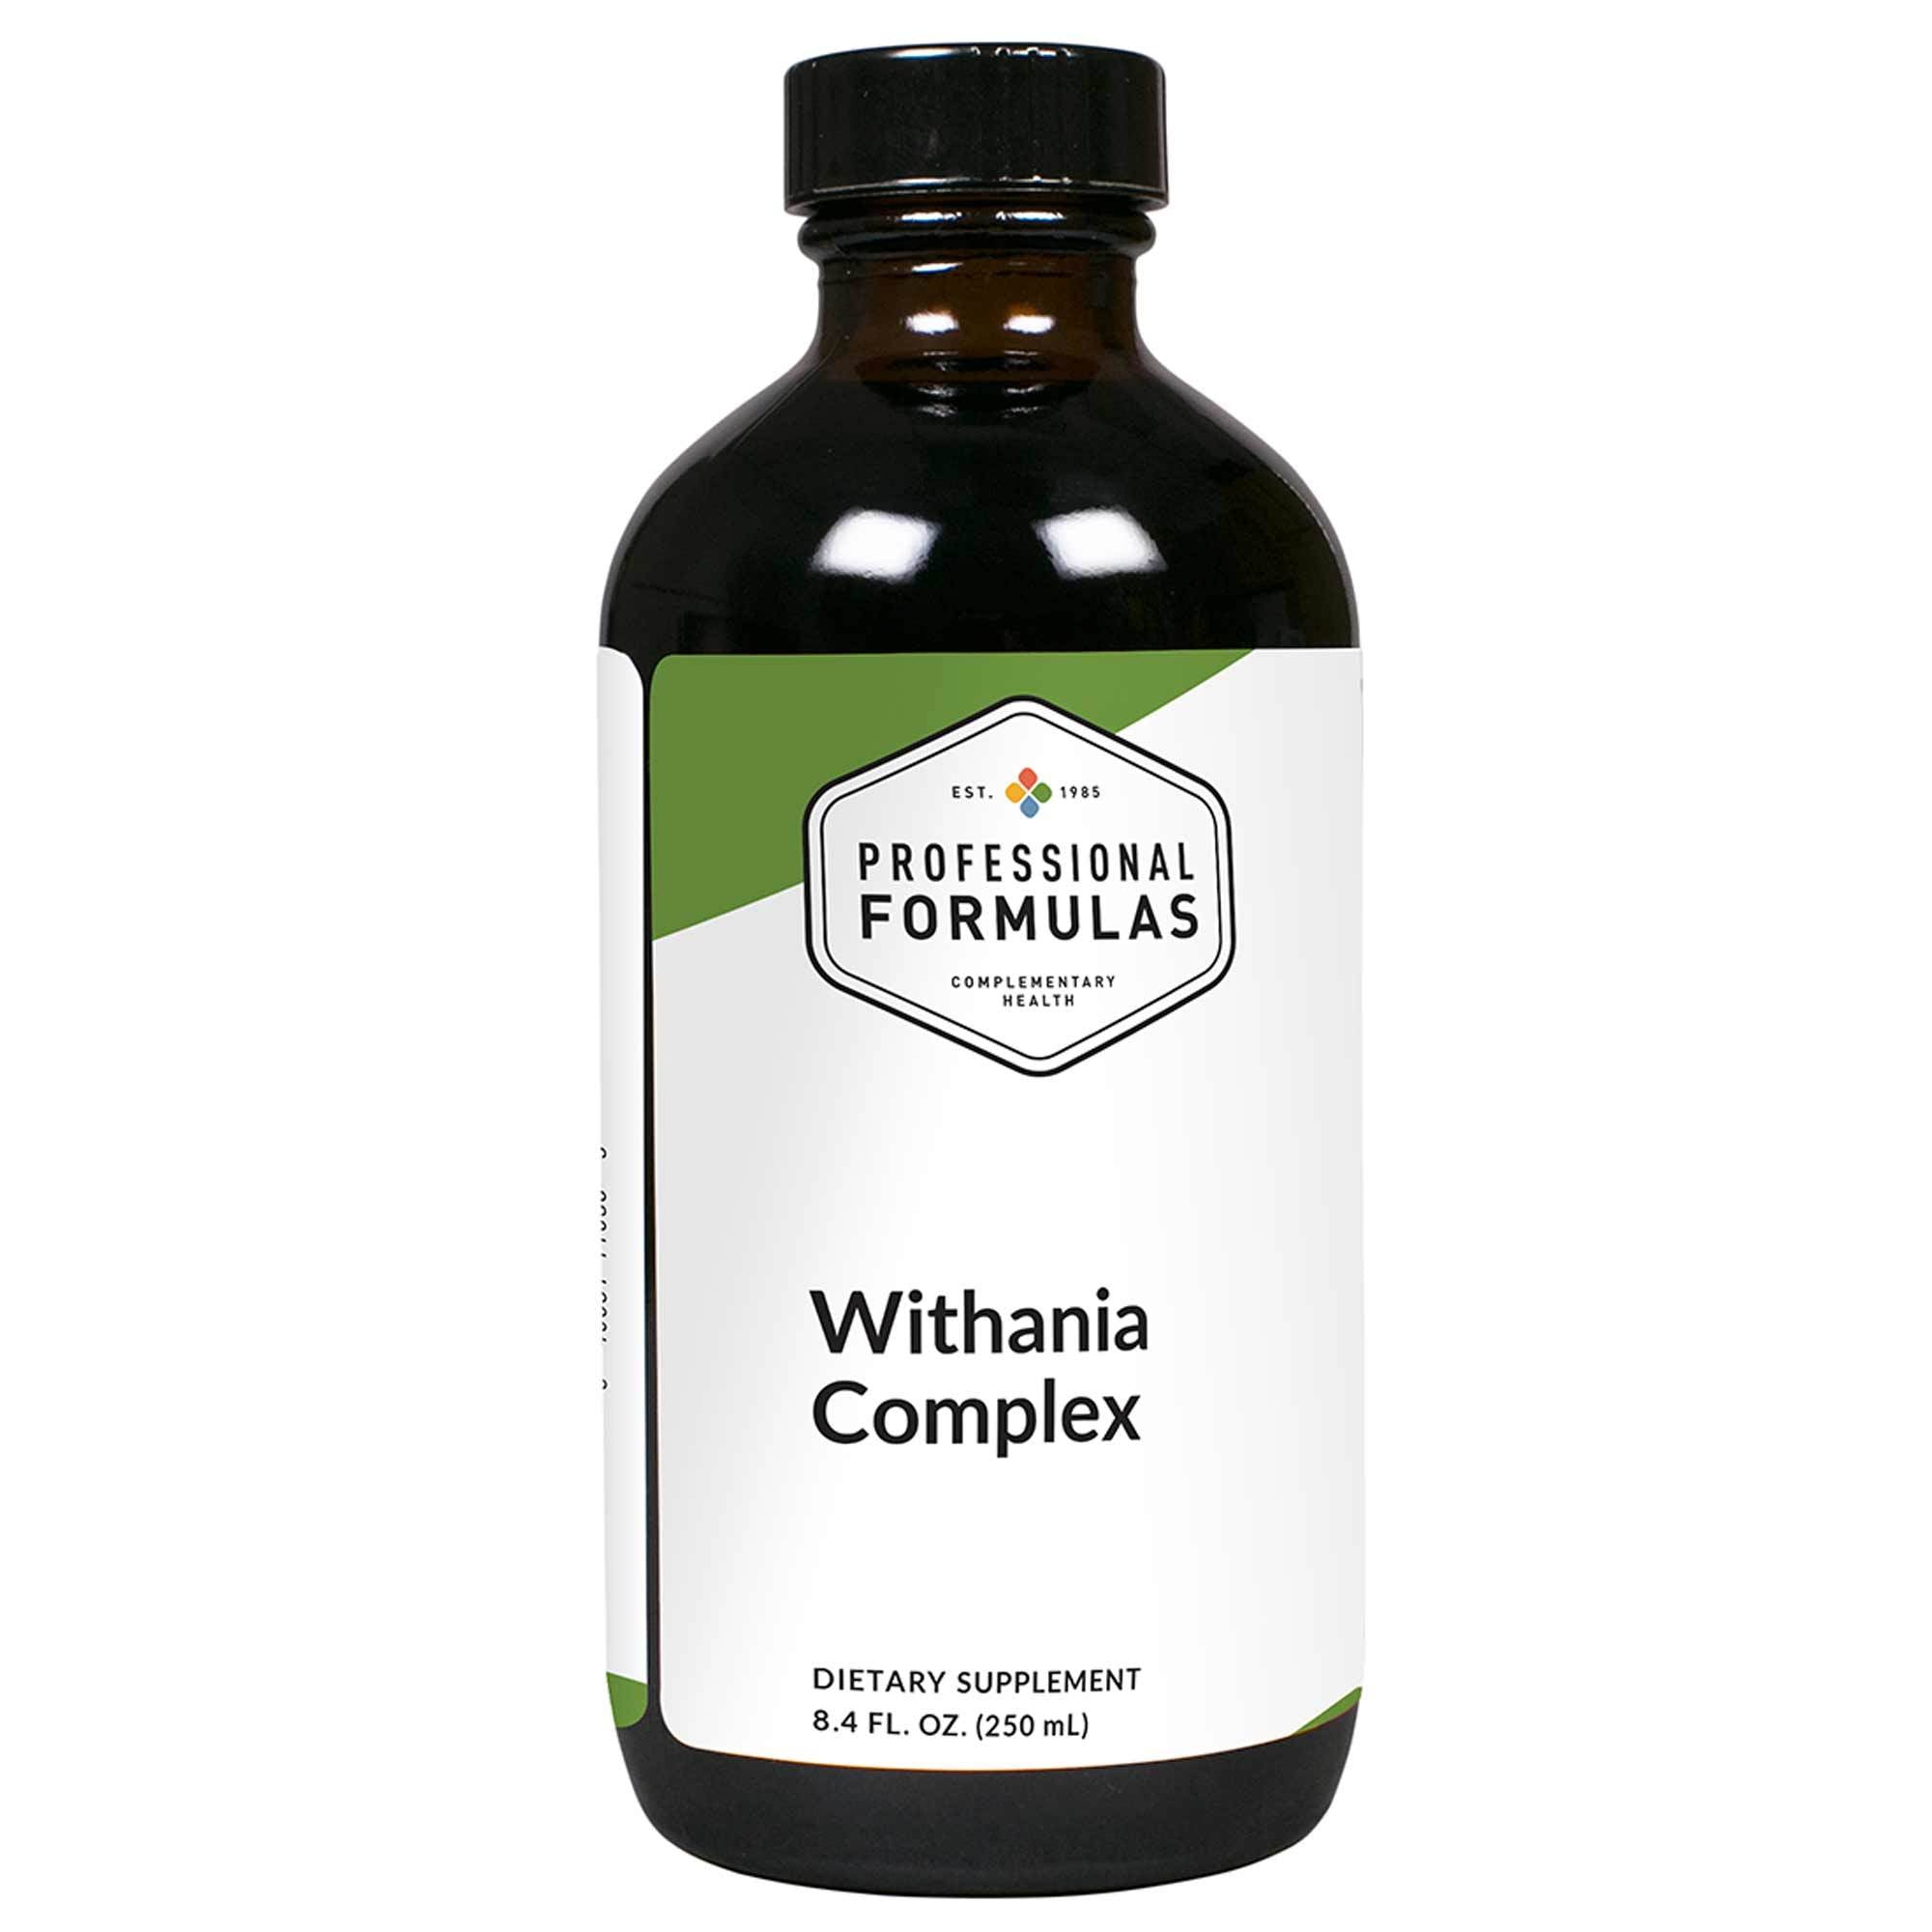 Professional Formulas - Withania Complex - 8.4 FL. OZ. (250 mL)